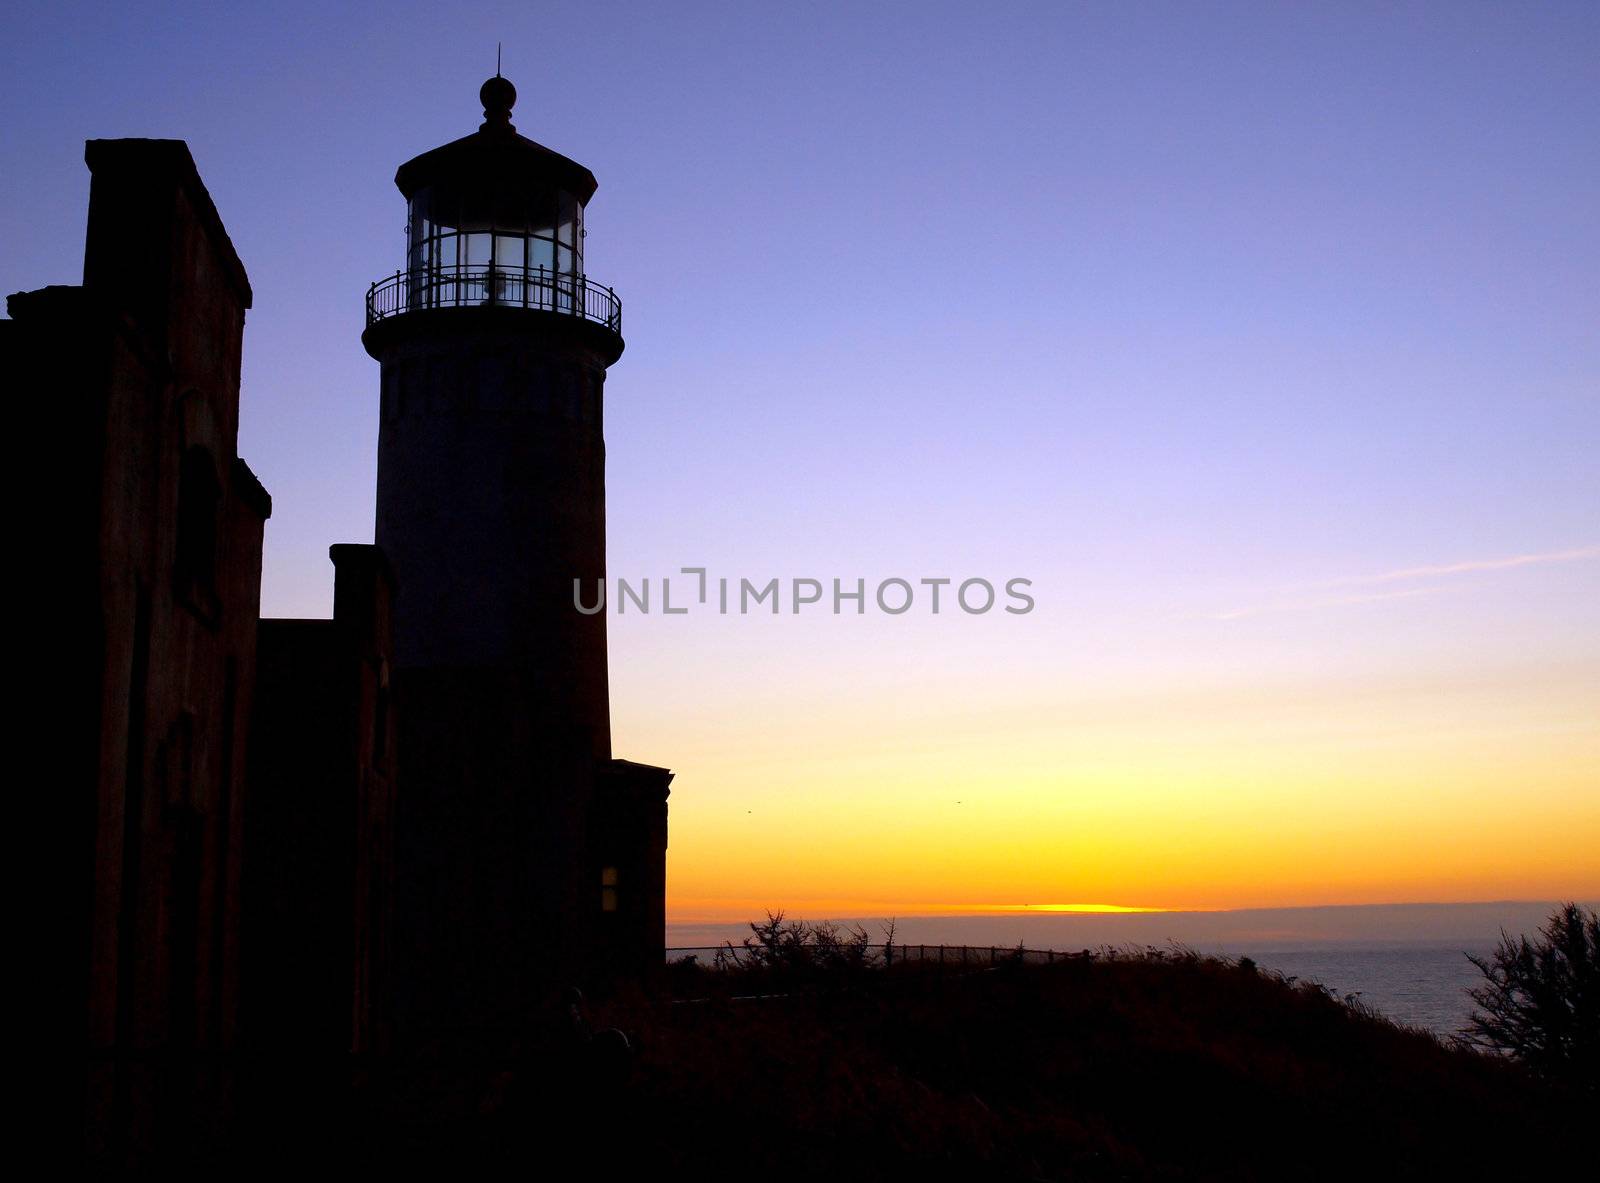 Lighthouse on the Washington Coast at Sunset by Frankljunior